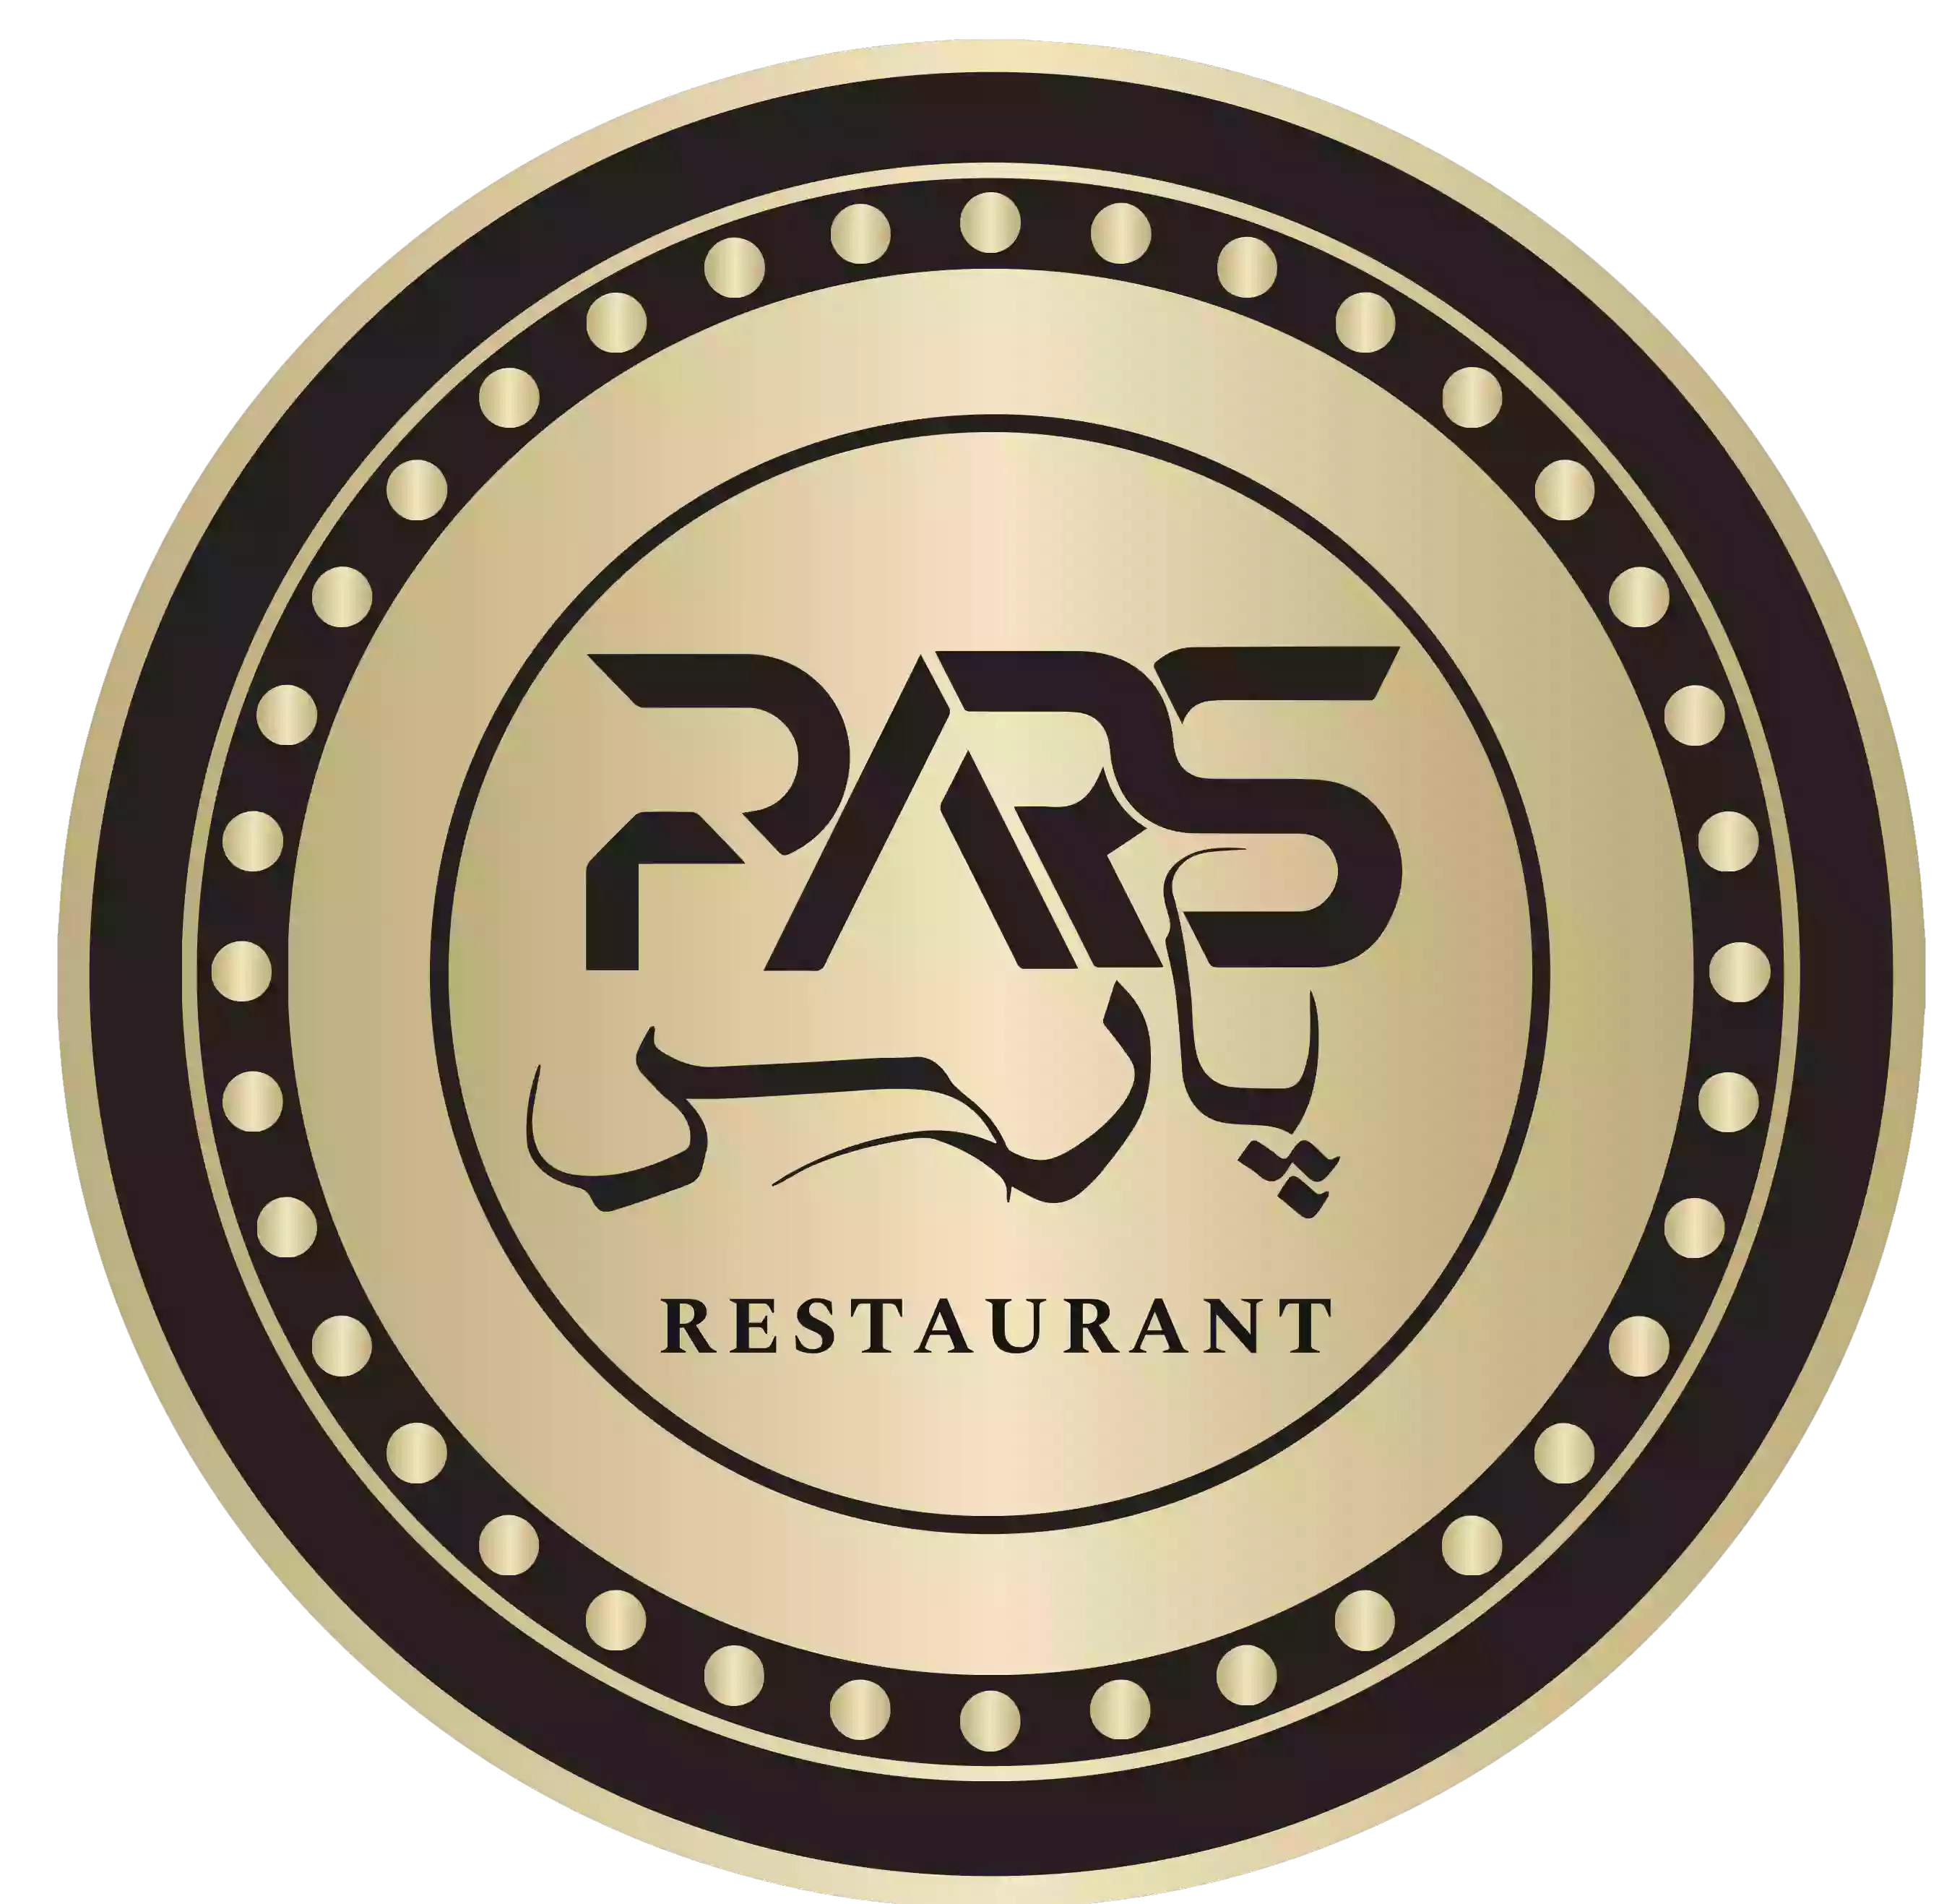 Pars Restaurant